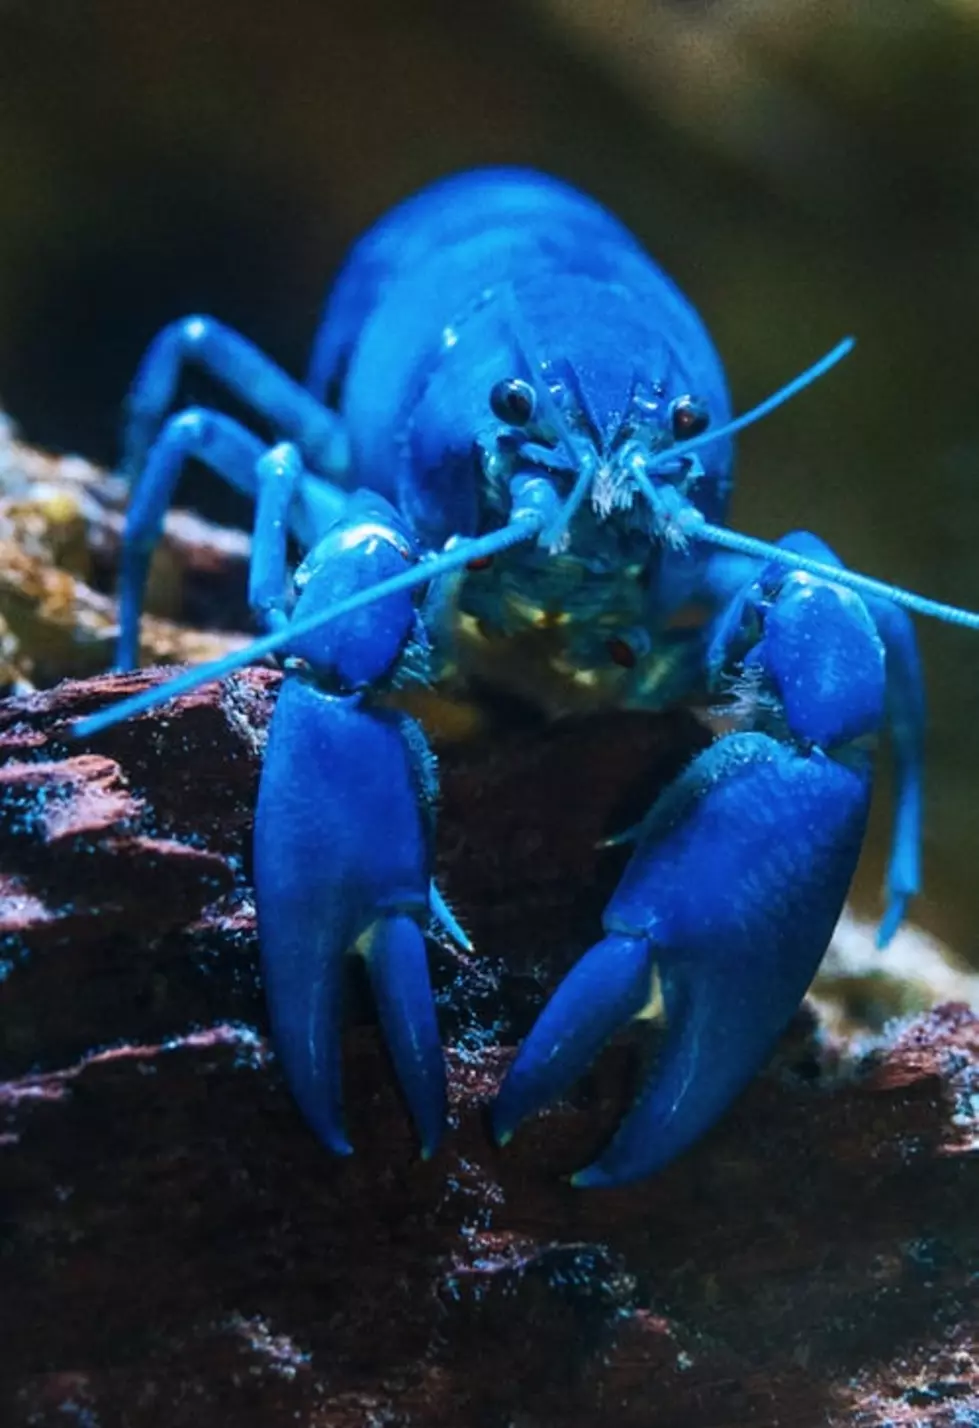 Albany Restaurant Removes Rare Lobster From Menu